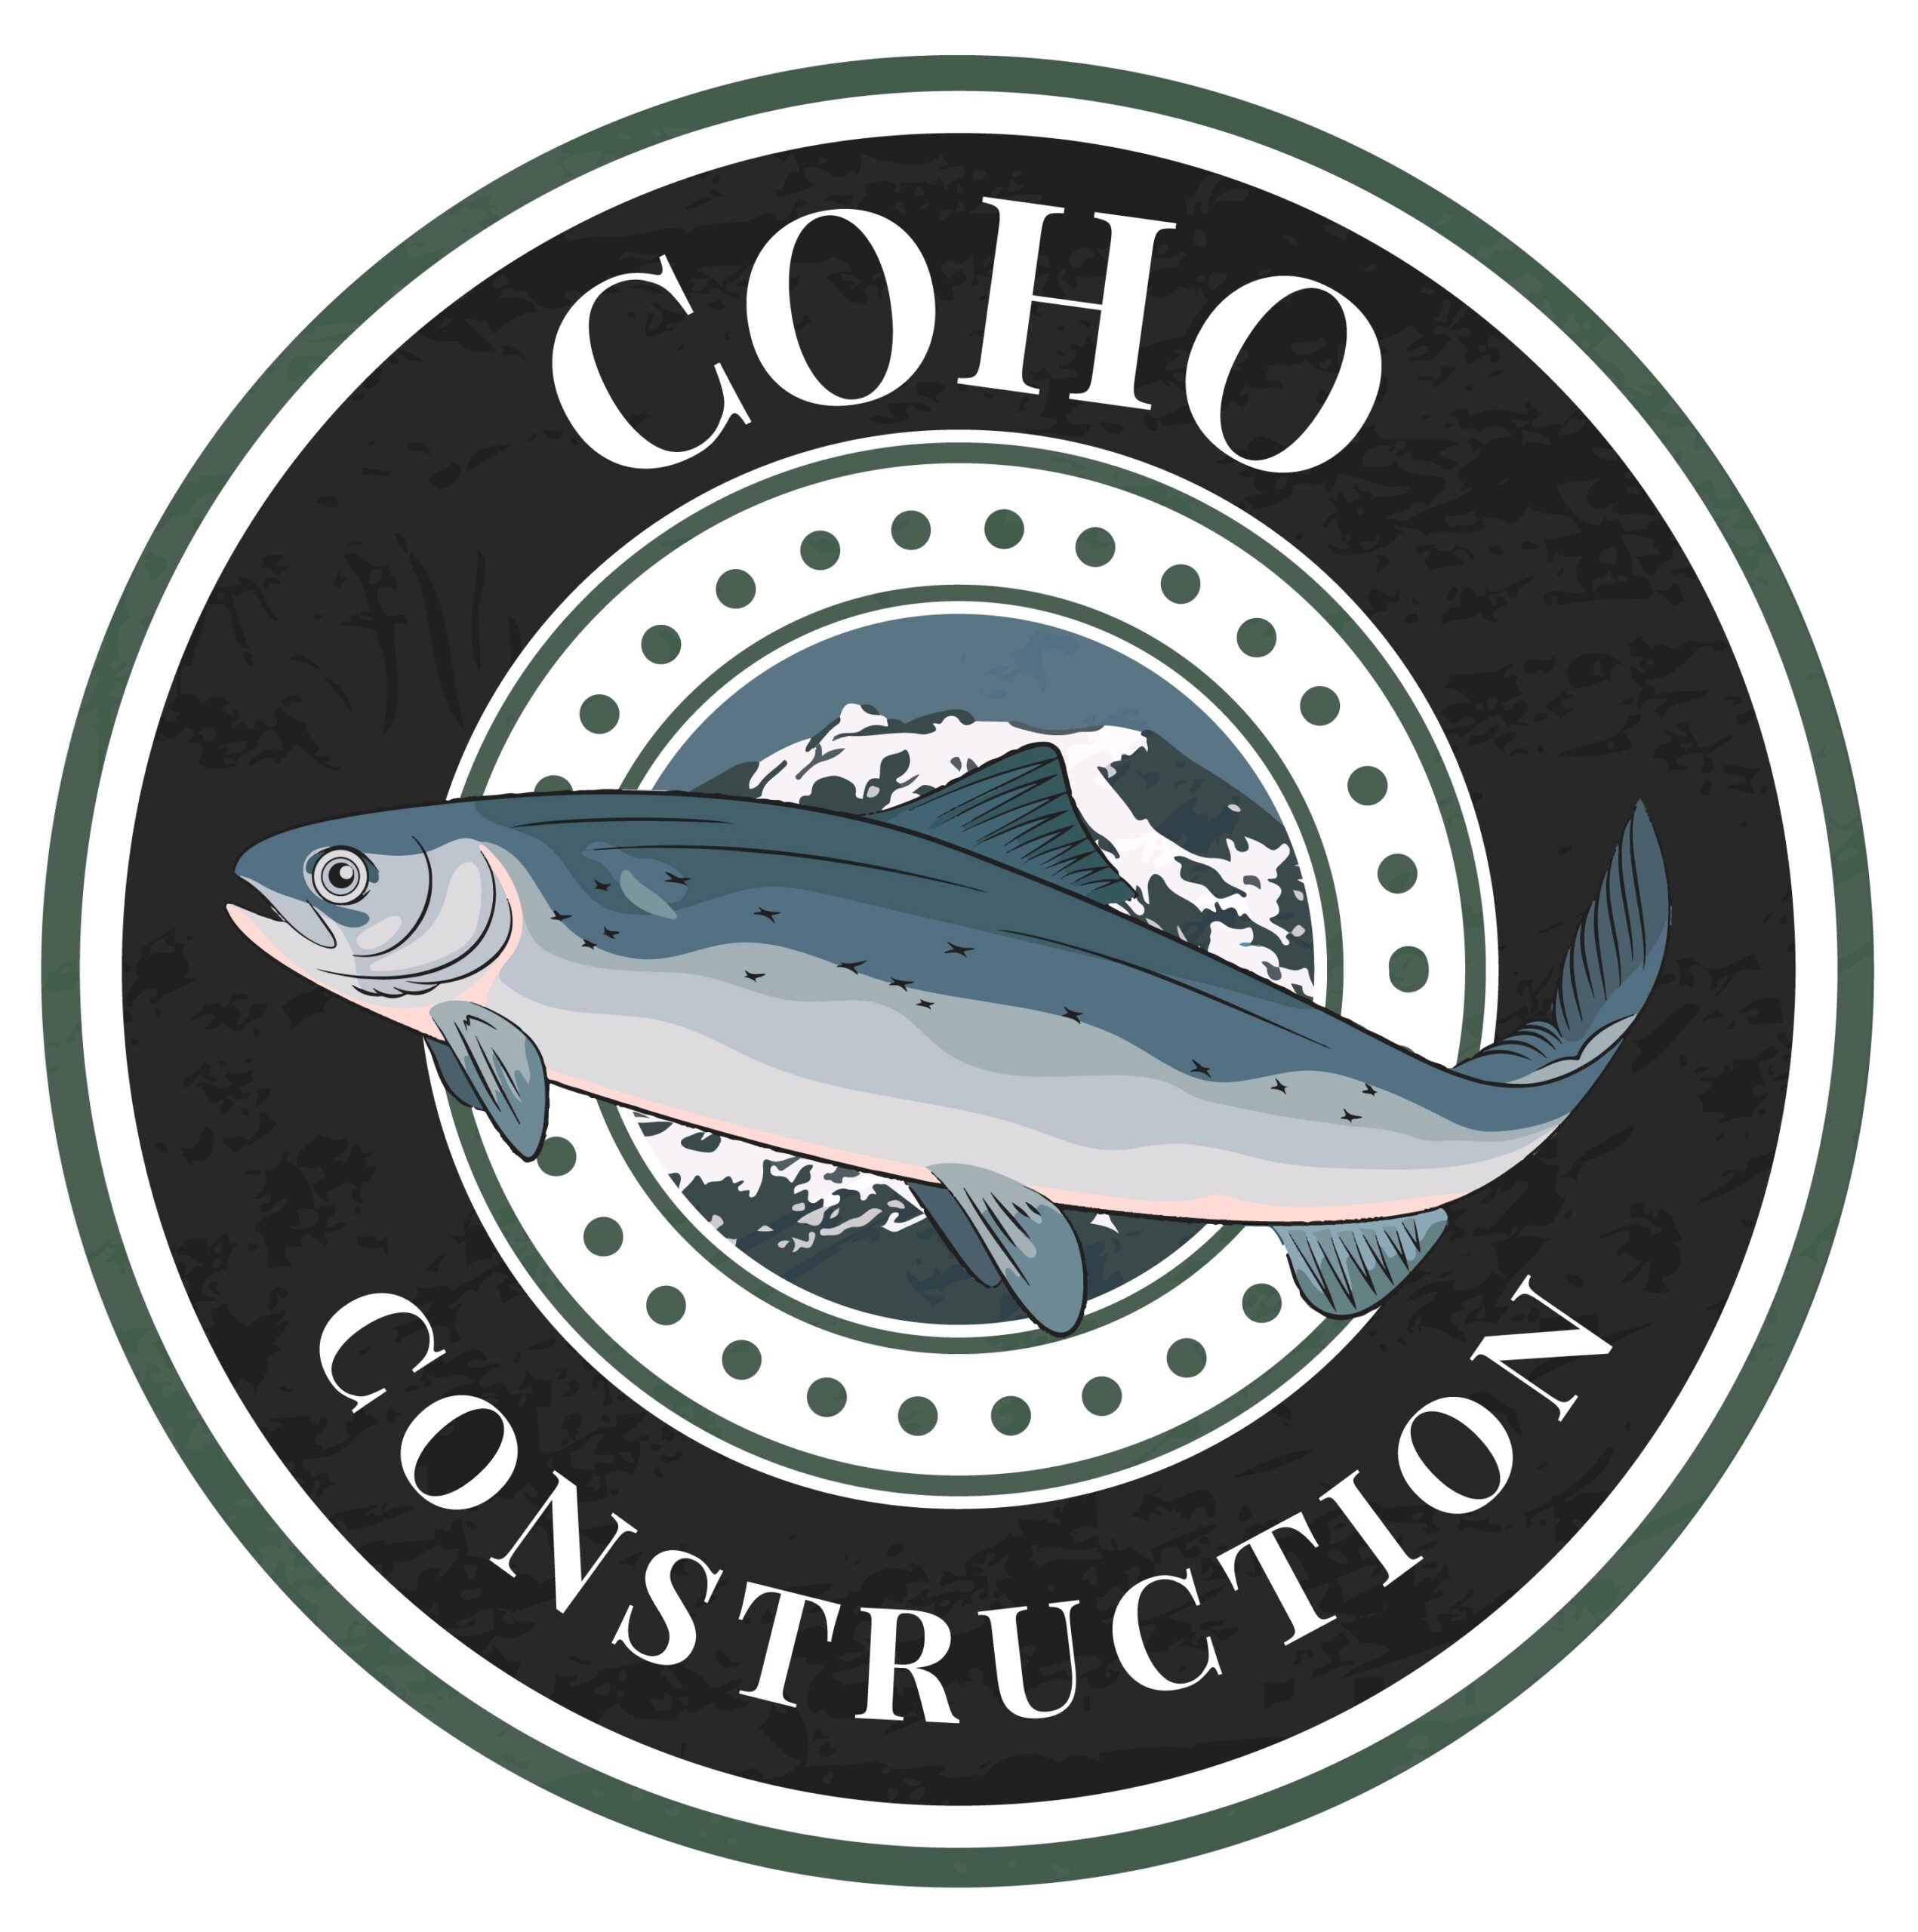 COHO Construction